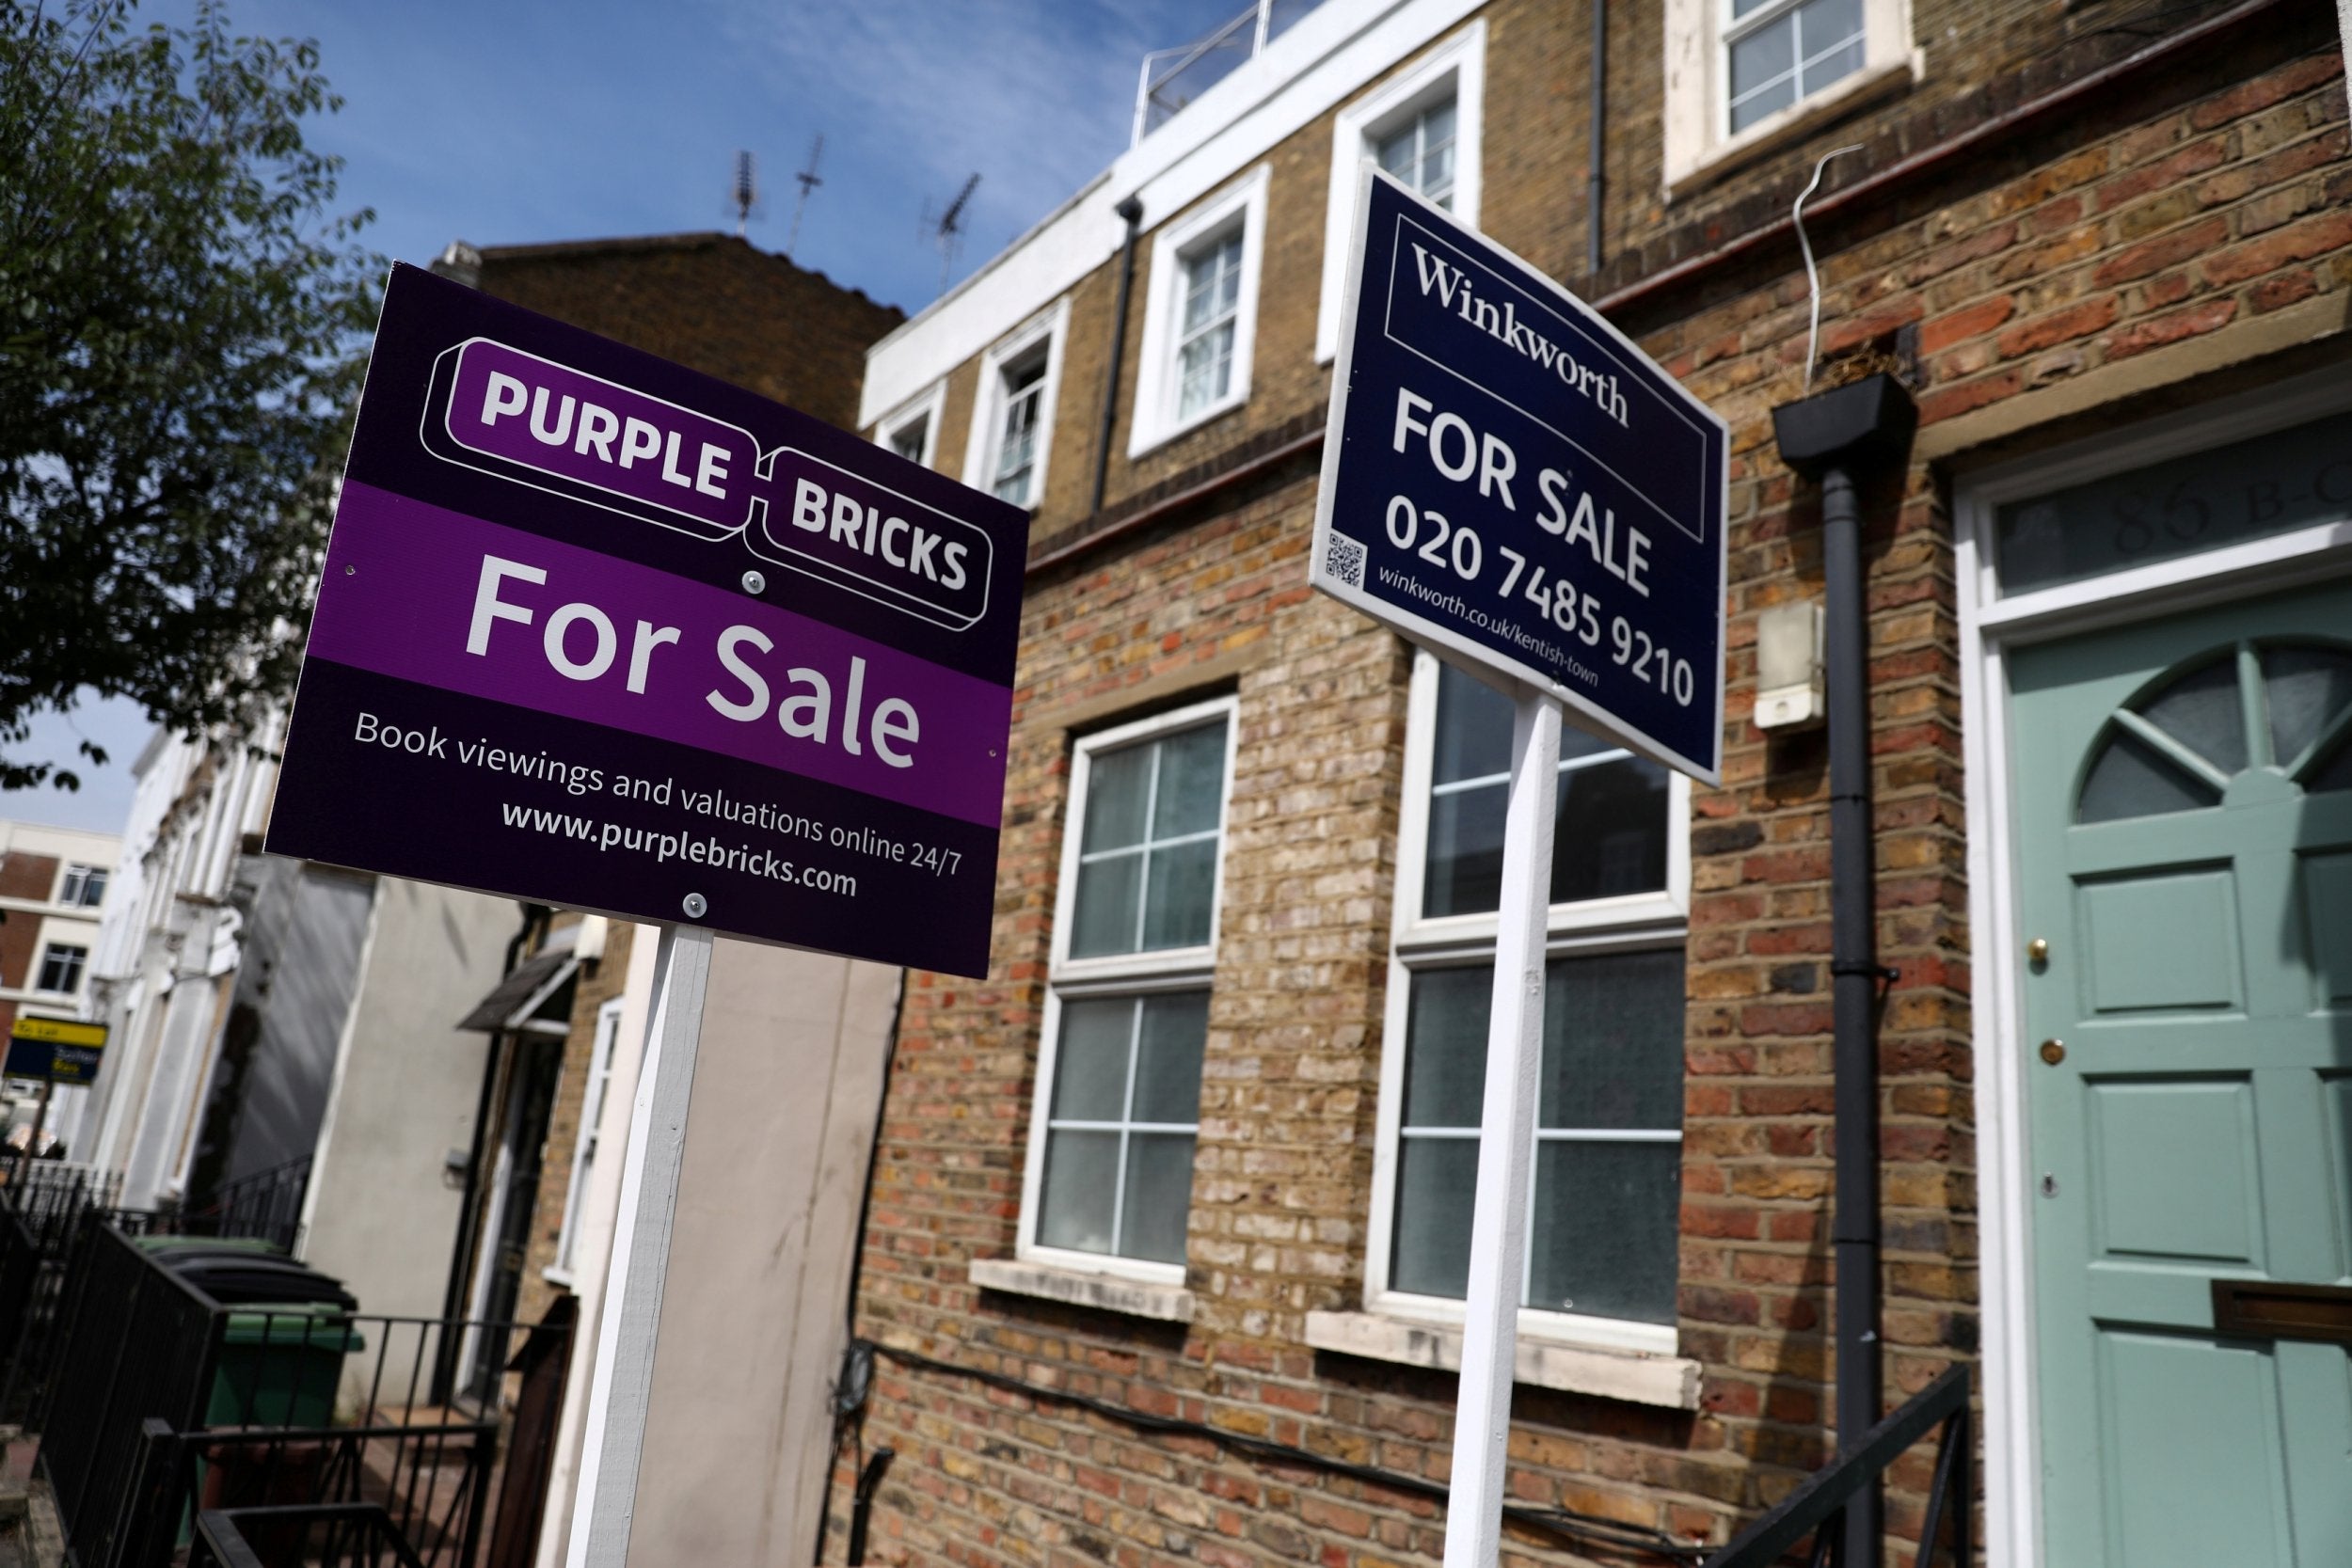 Purplebricks was named a super brand in the UK but the shares have struggled